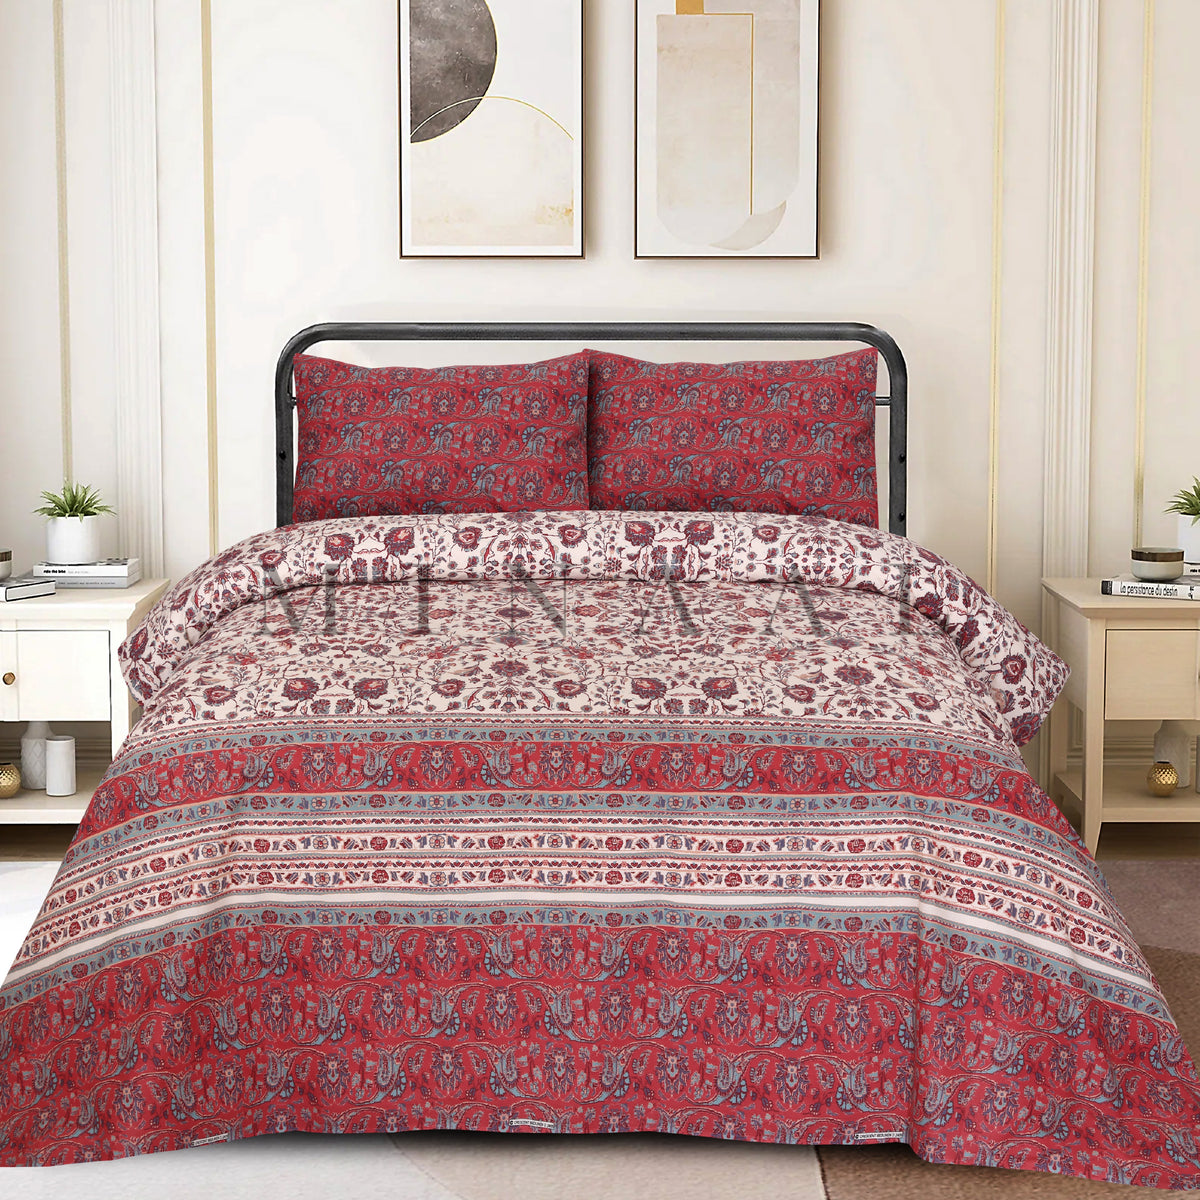 Admiry - (Premium Cotton ) Bed Sheet set